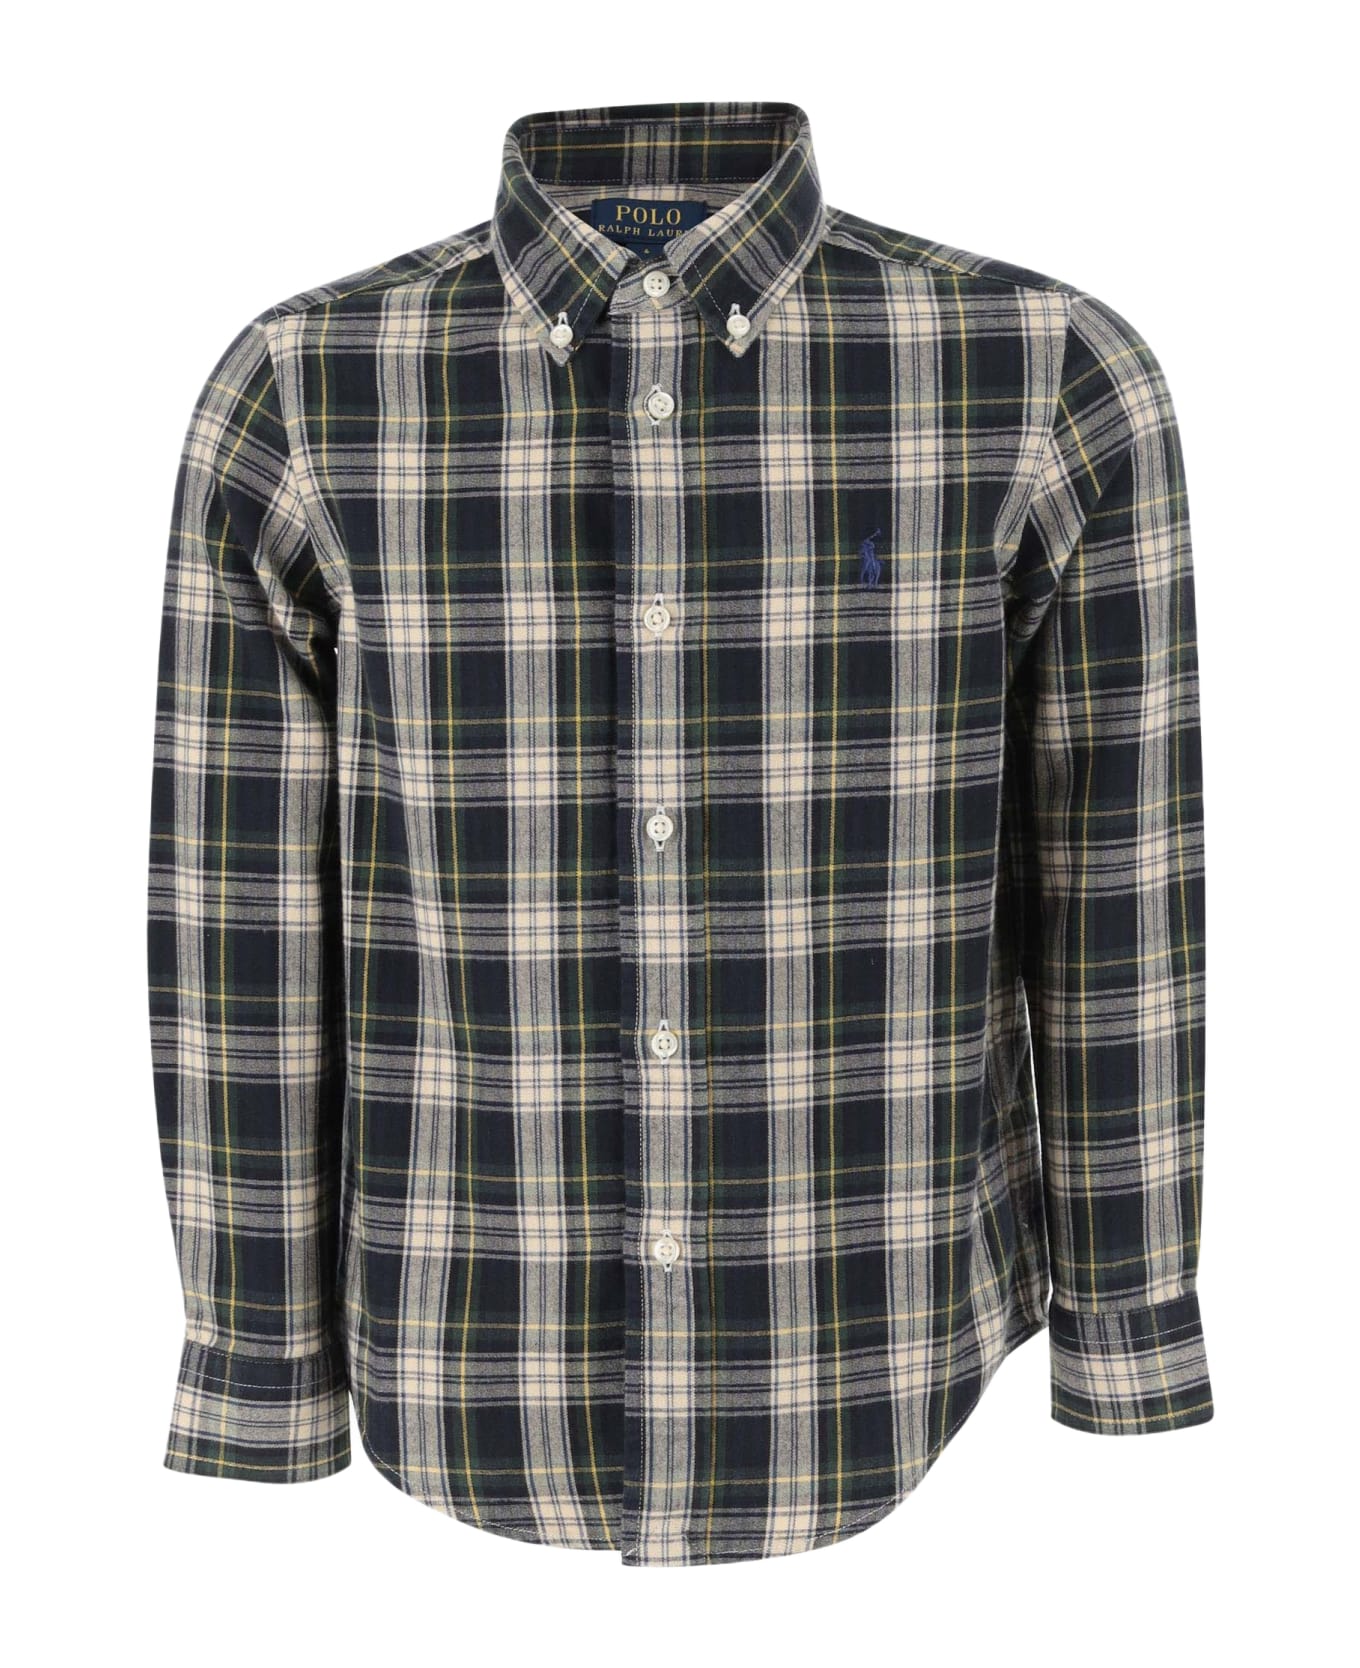 Ralph Lauren Cotton Shirt With Check Pattern - Navy Green